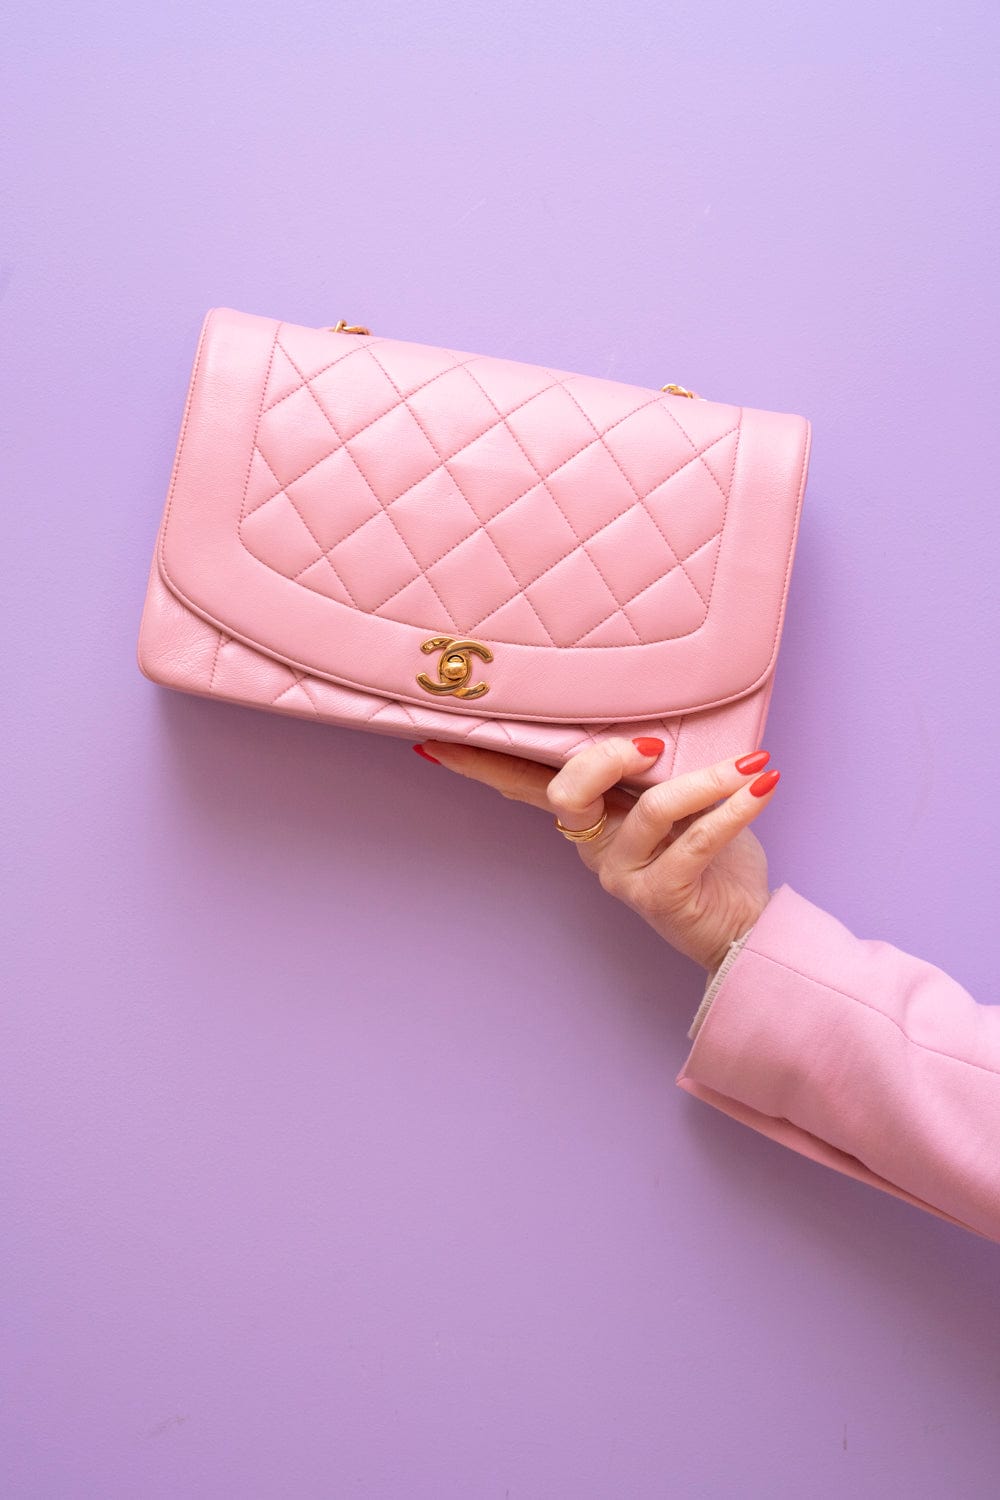 Chanel Vintage Watercolour Pink & Purple Flap Bag 👛🌂 Scuba like